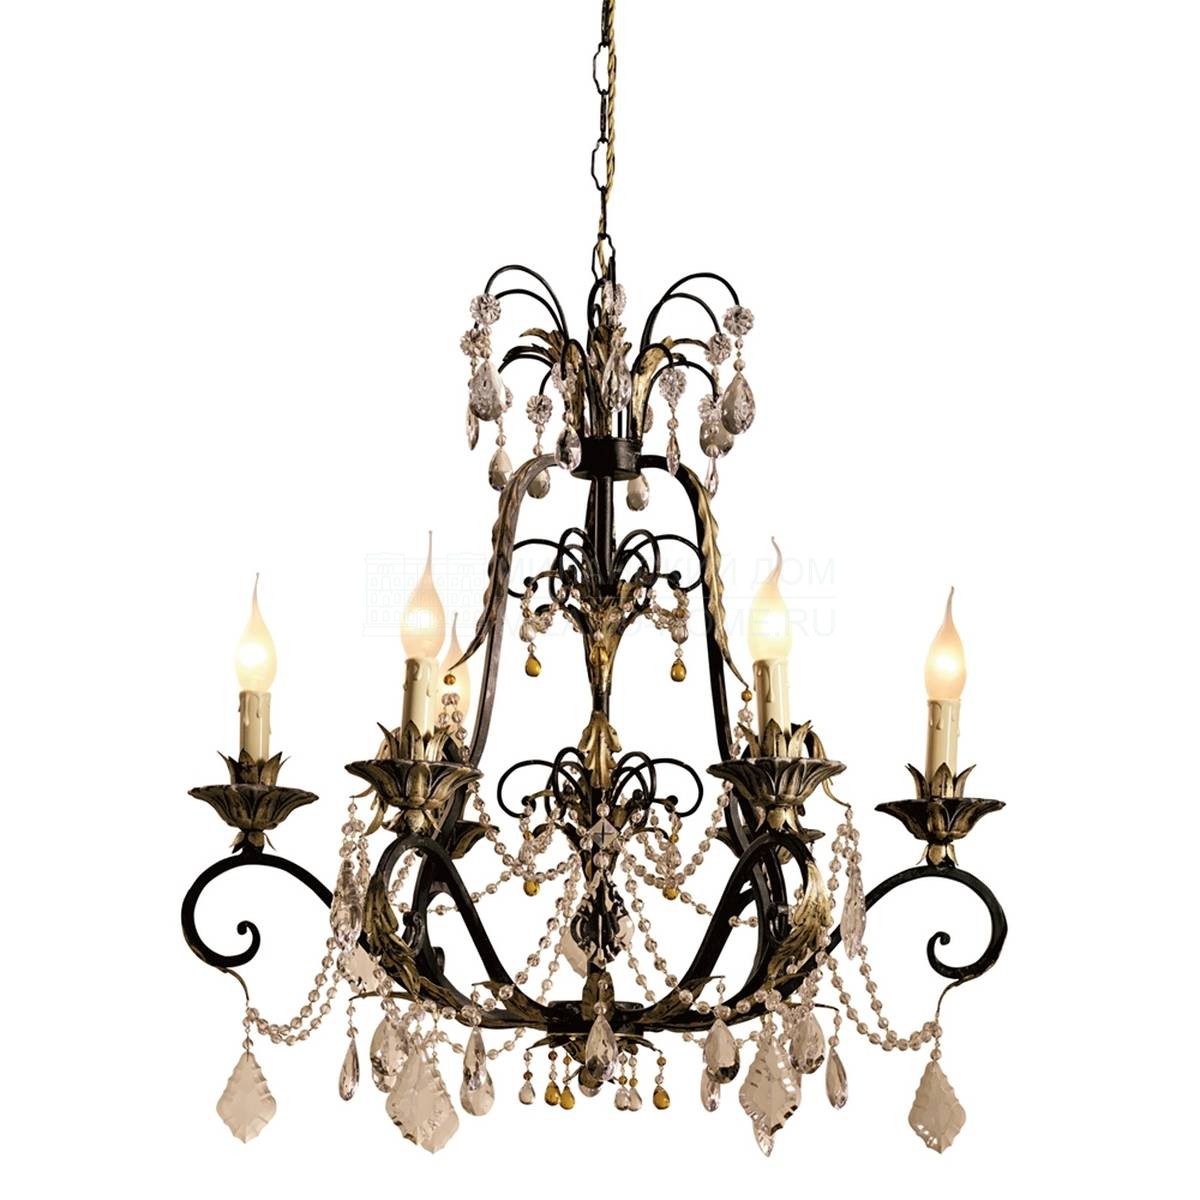 Люстра Bell chandelier six lights из Италии фабрики MARIONI